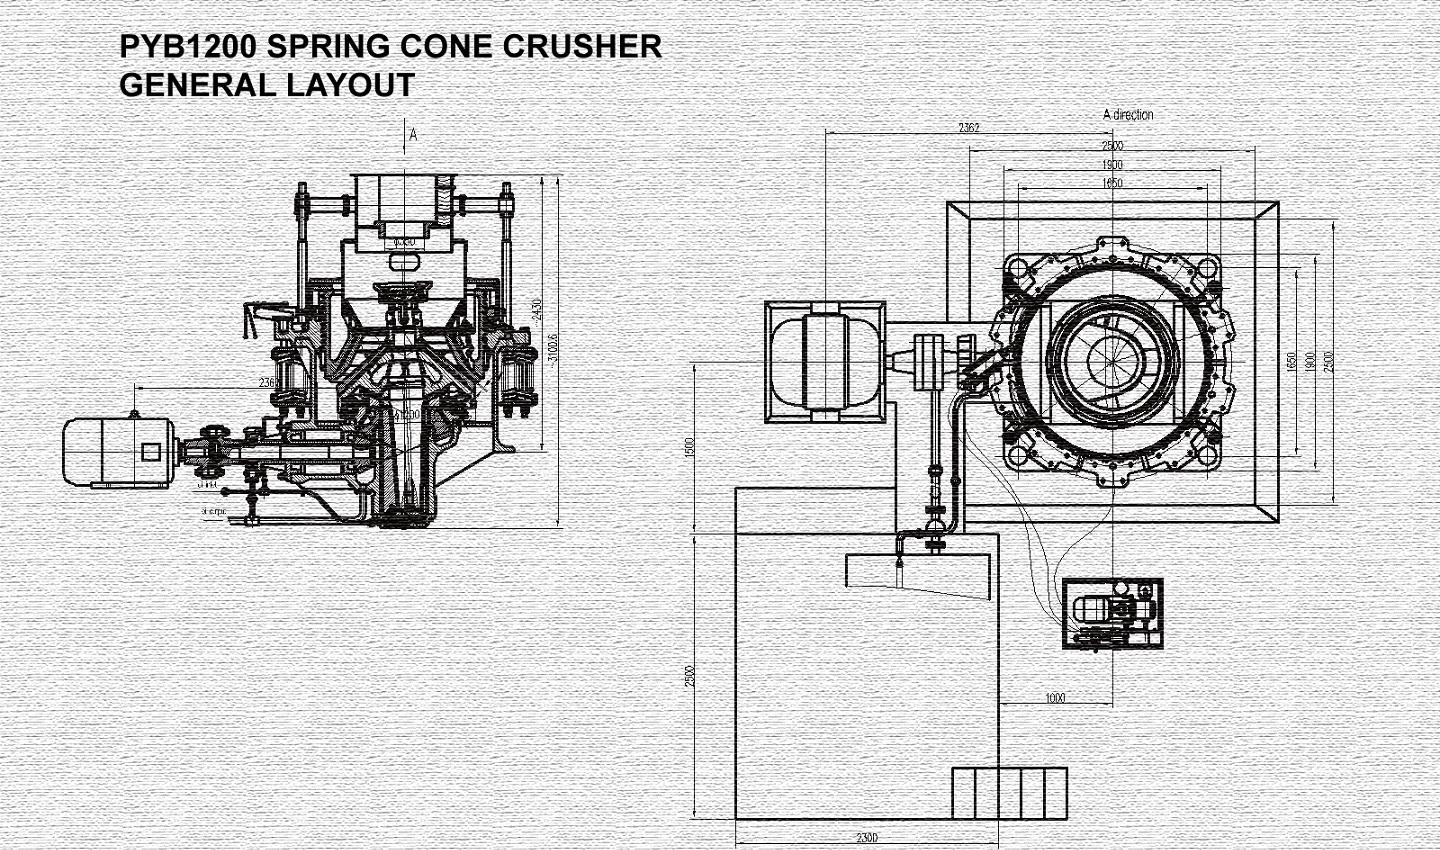 pyb1200-spring-cone-crusher.jpg